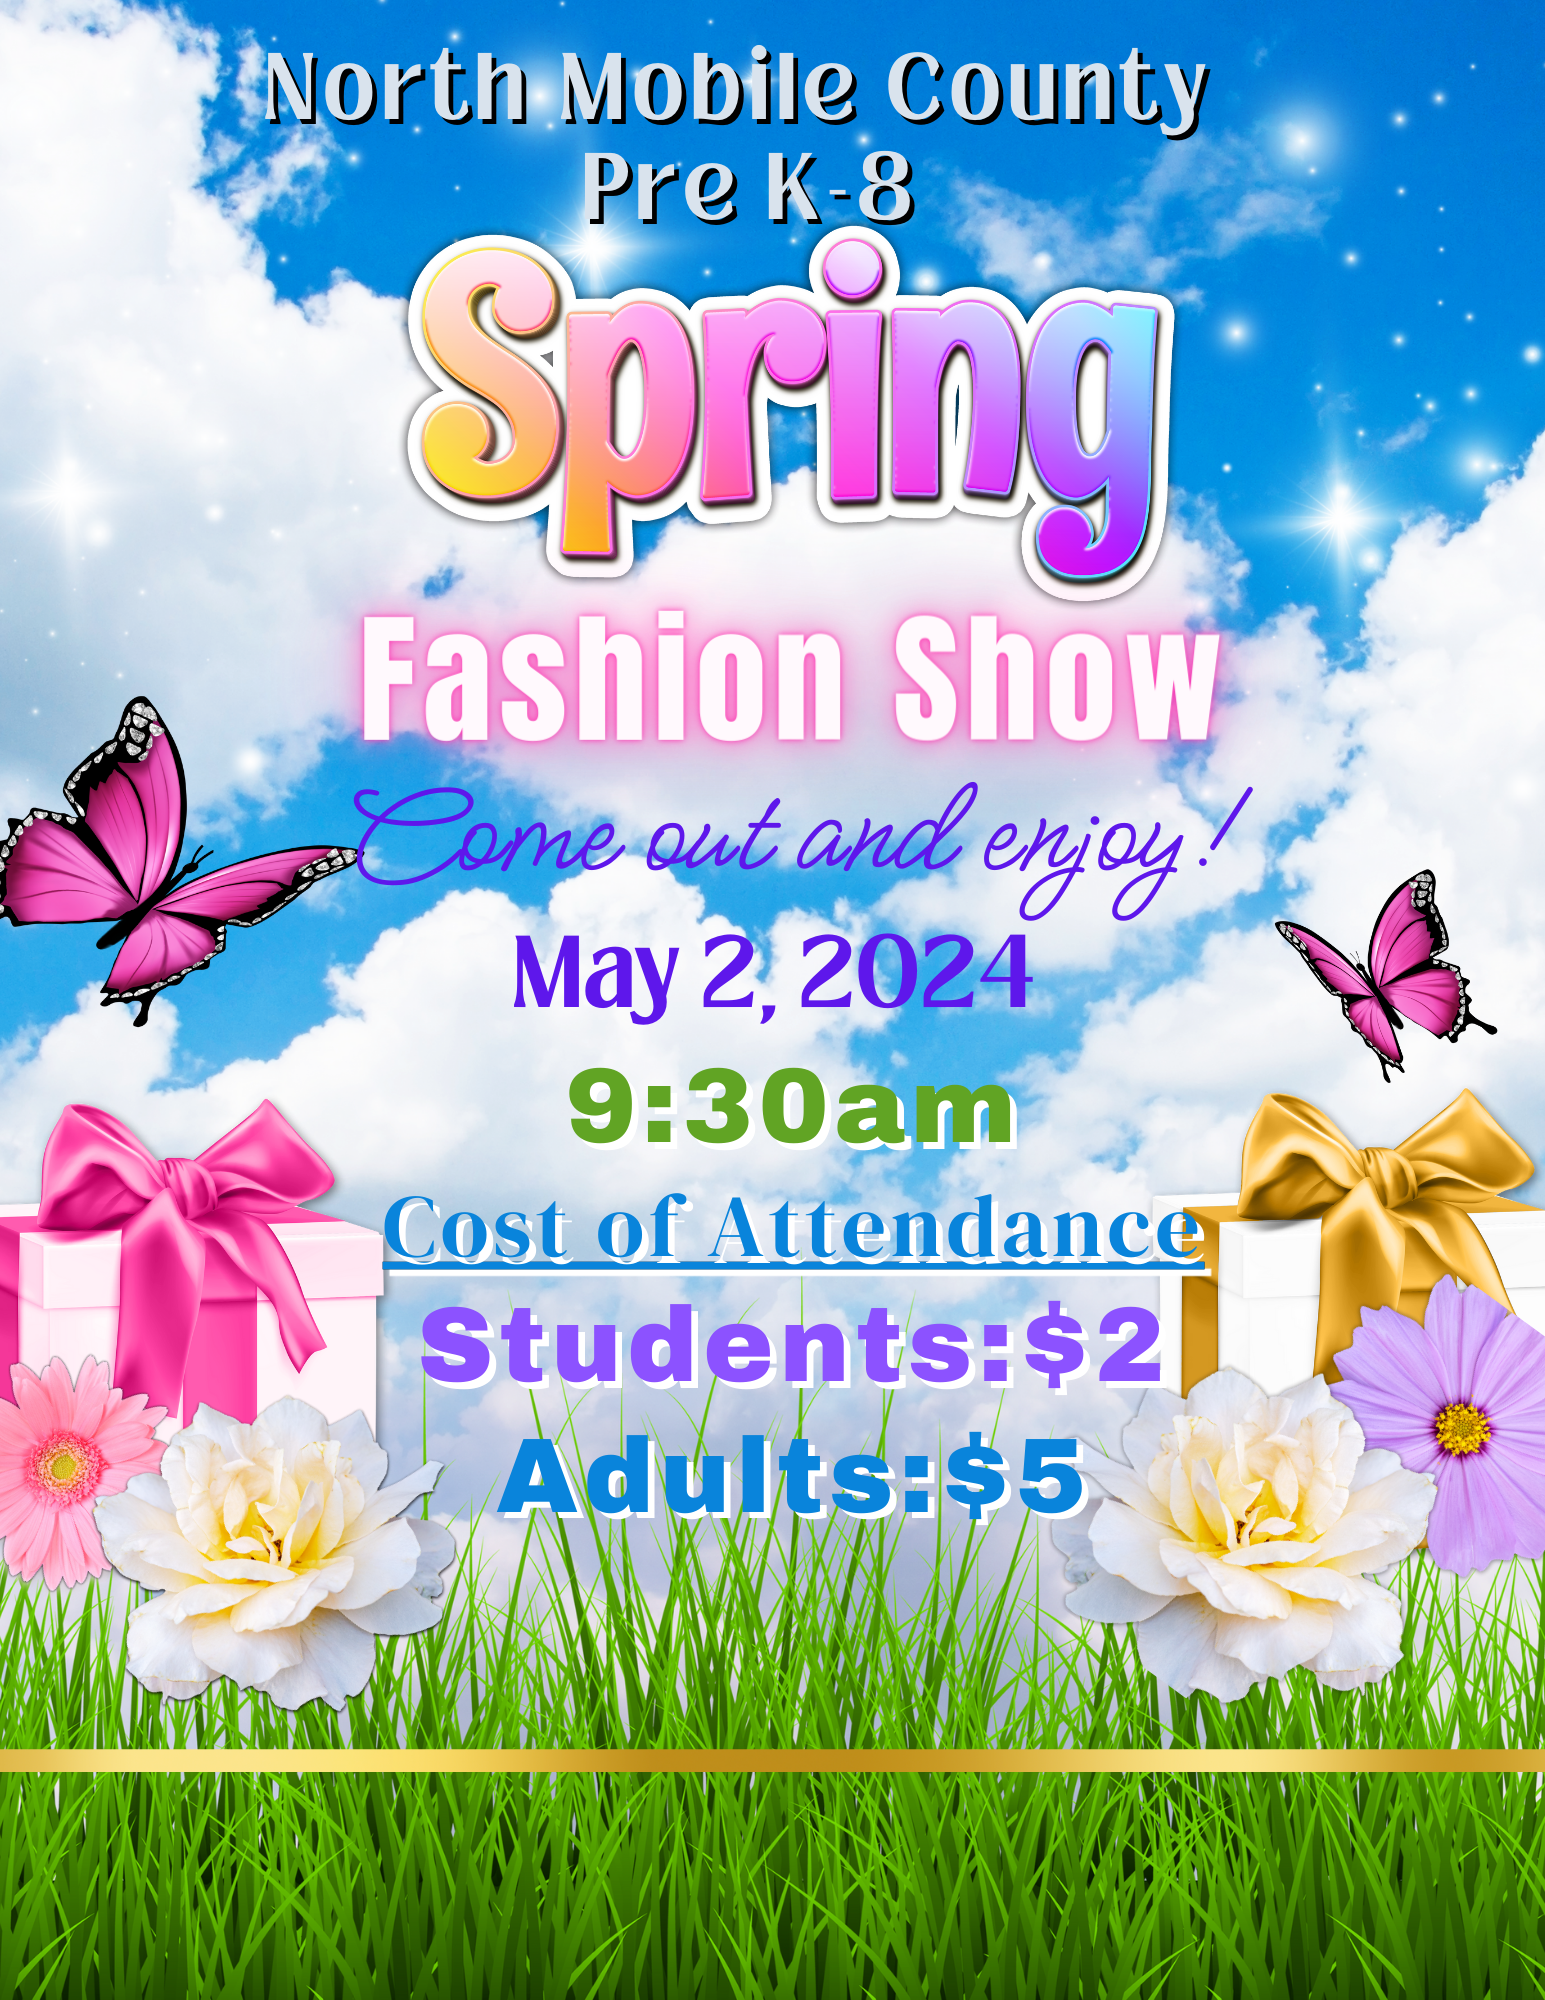 Spring Fashion Show